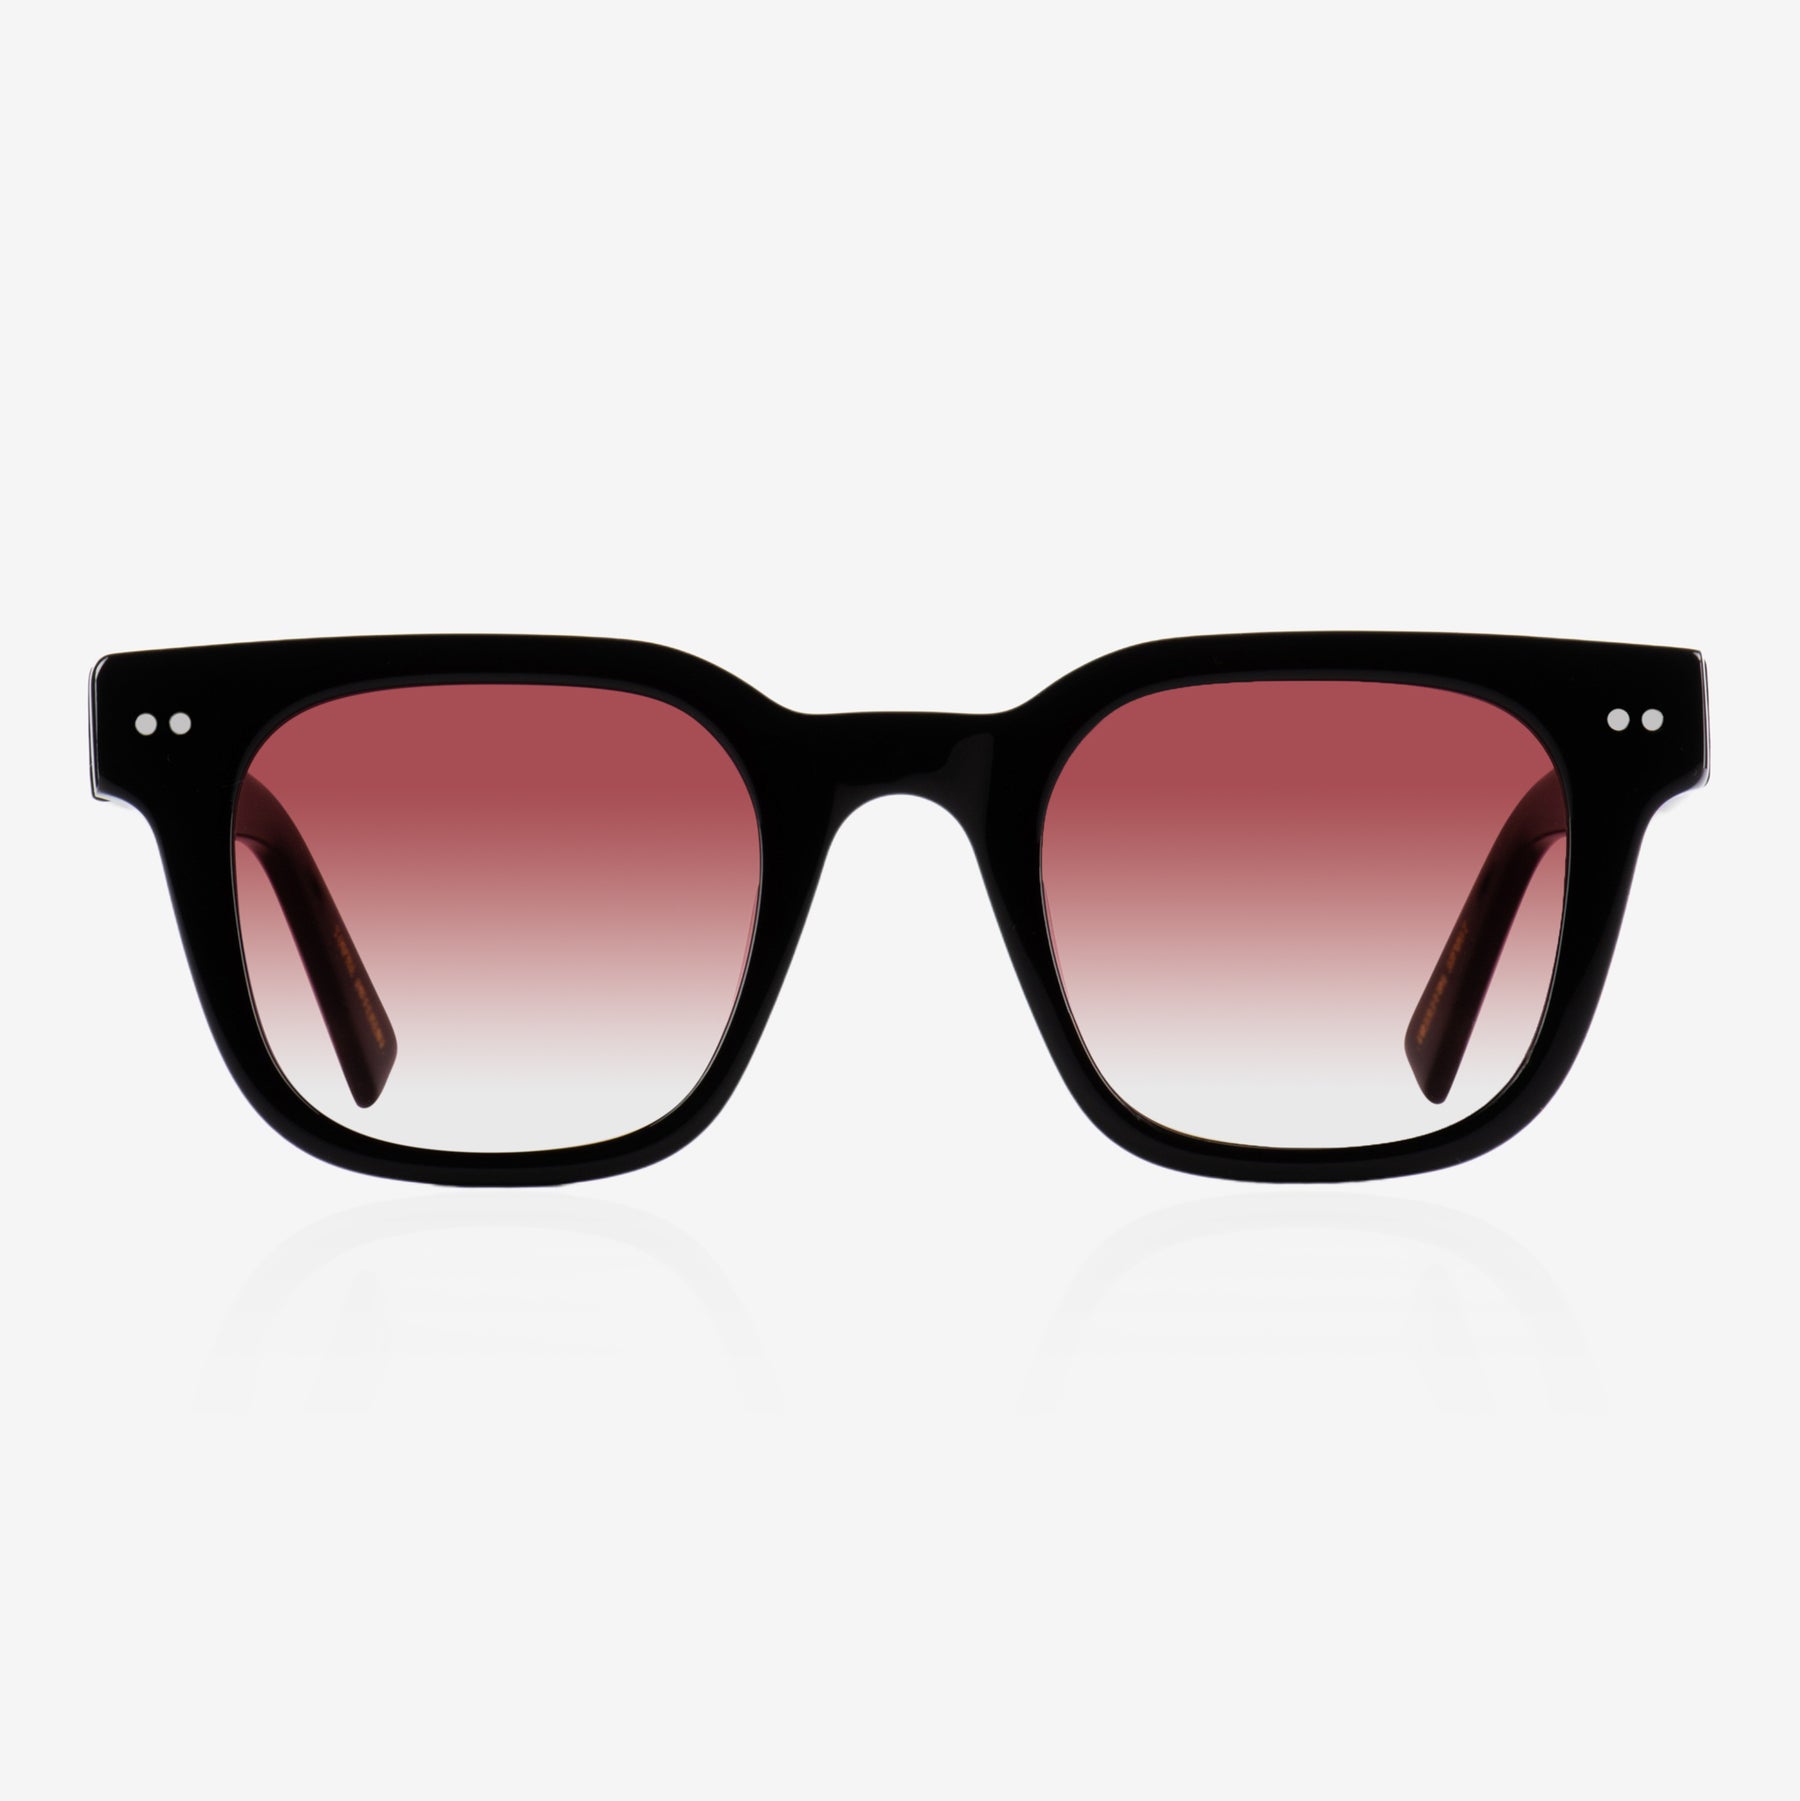 De-sunglasses| Dash cherry | Sunglasses for men and women